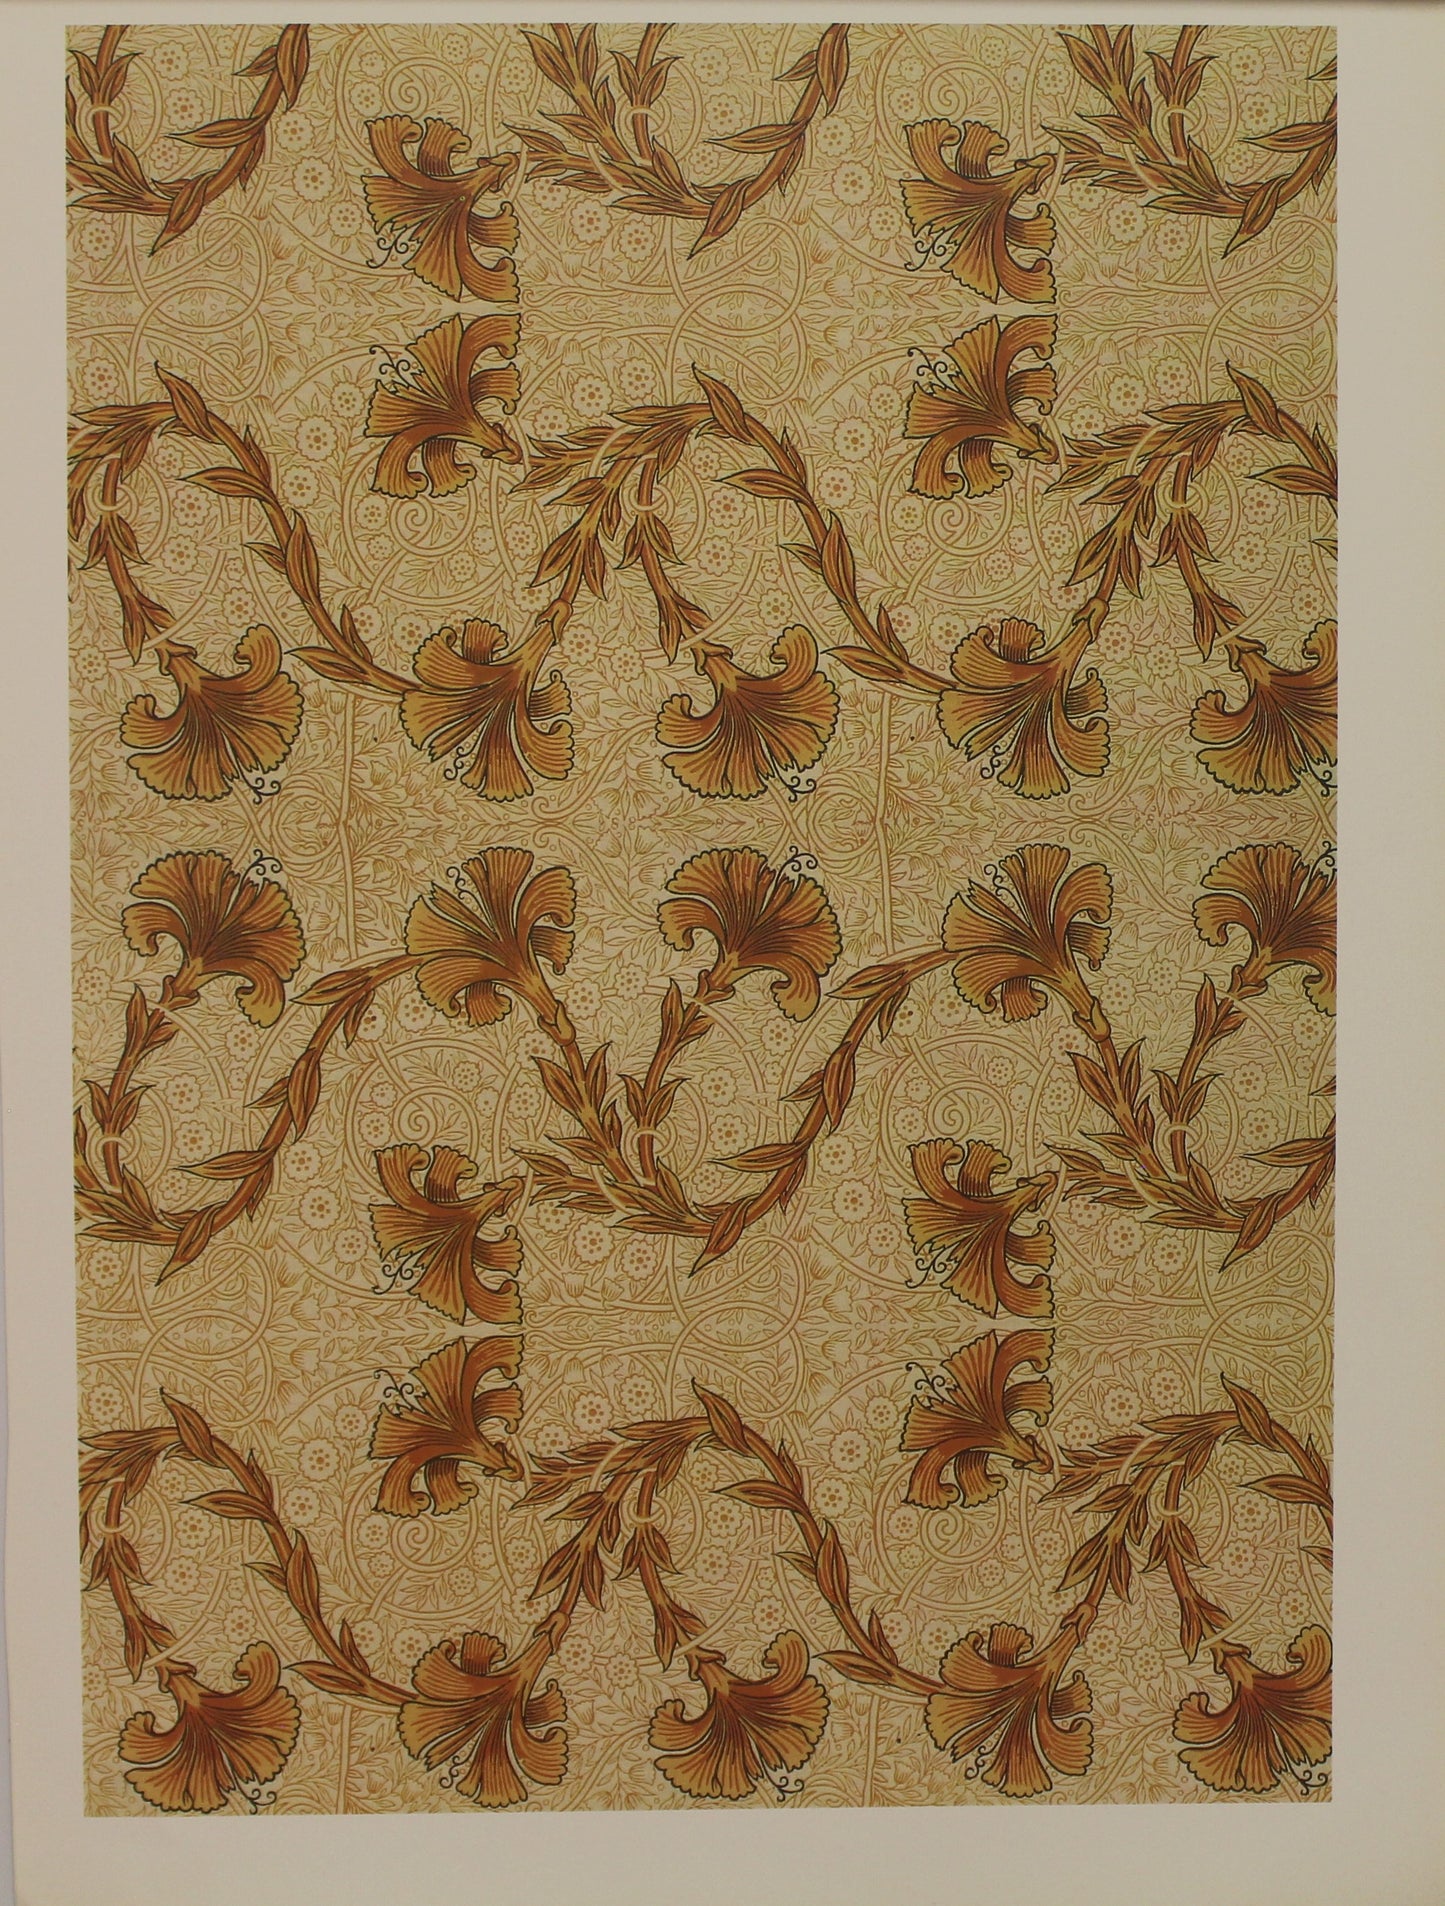 Decorator, Morris William, Wallpaper Design, Marigold, Plate 11, Art Nouveau, c1875